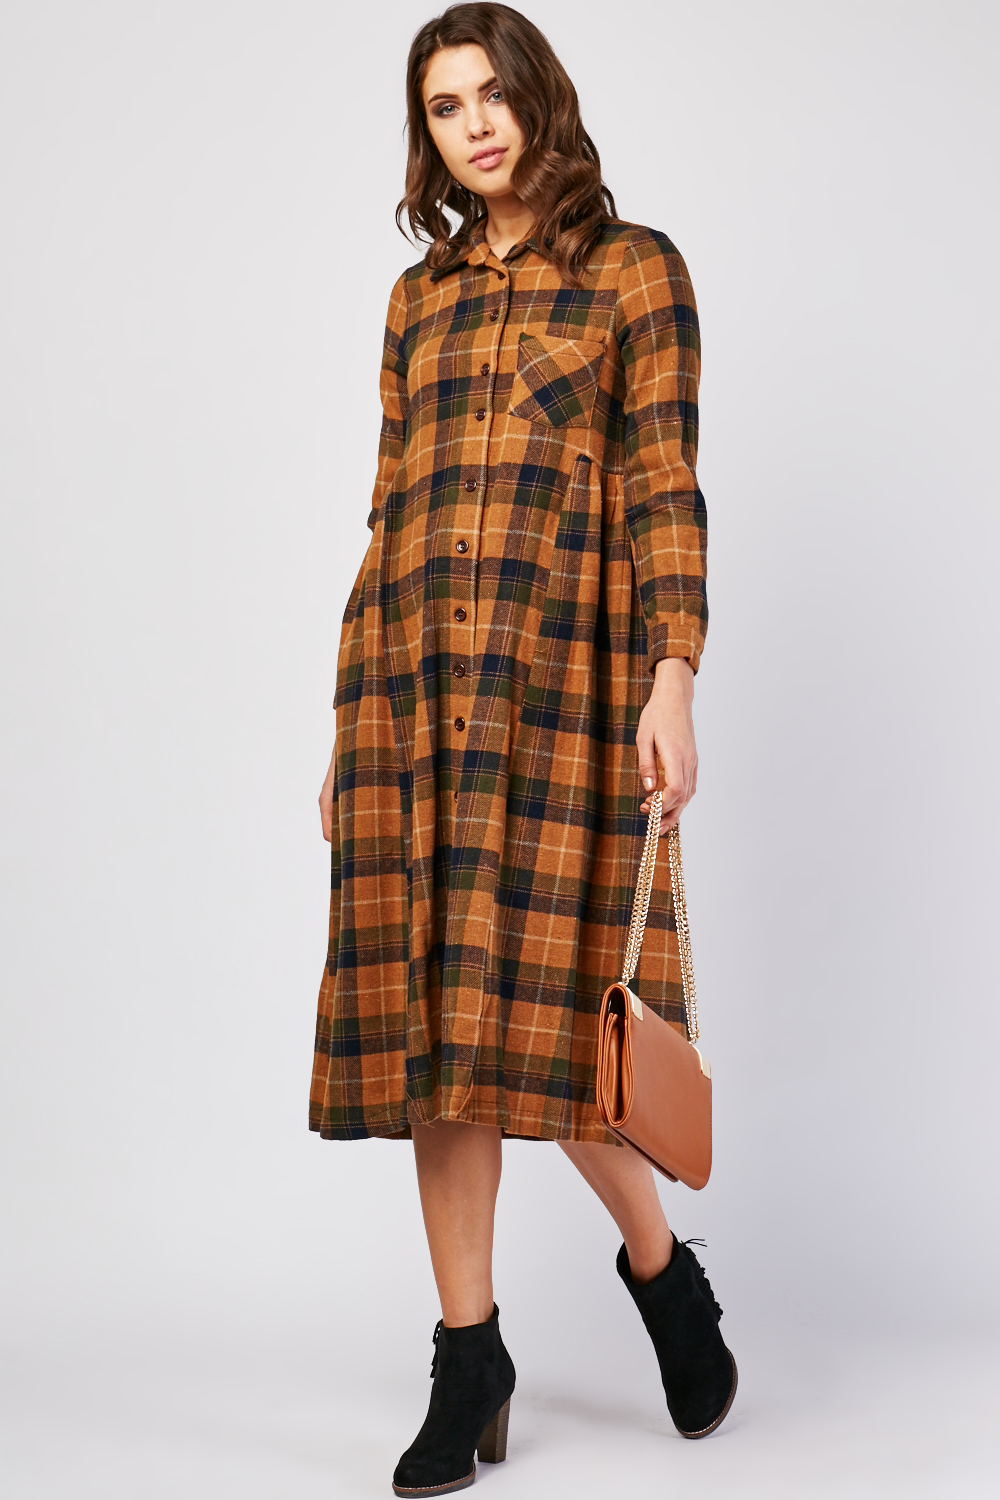 Prairie Checkered Midi Dress - Just $7